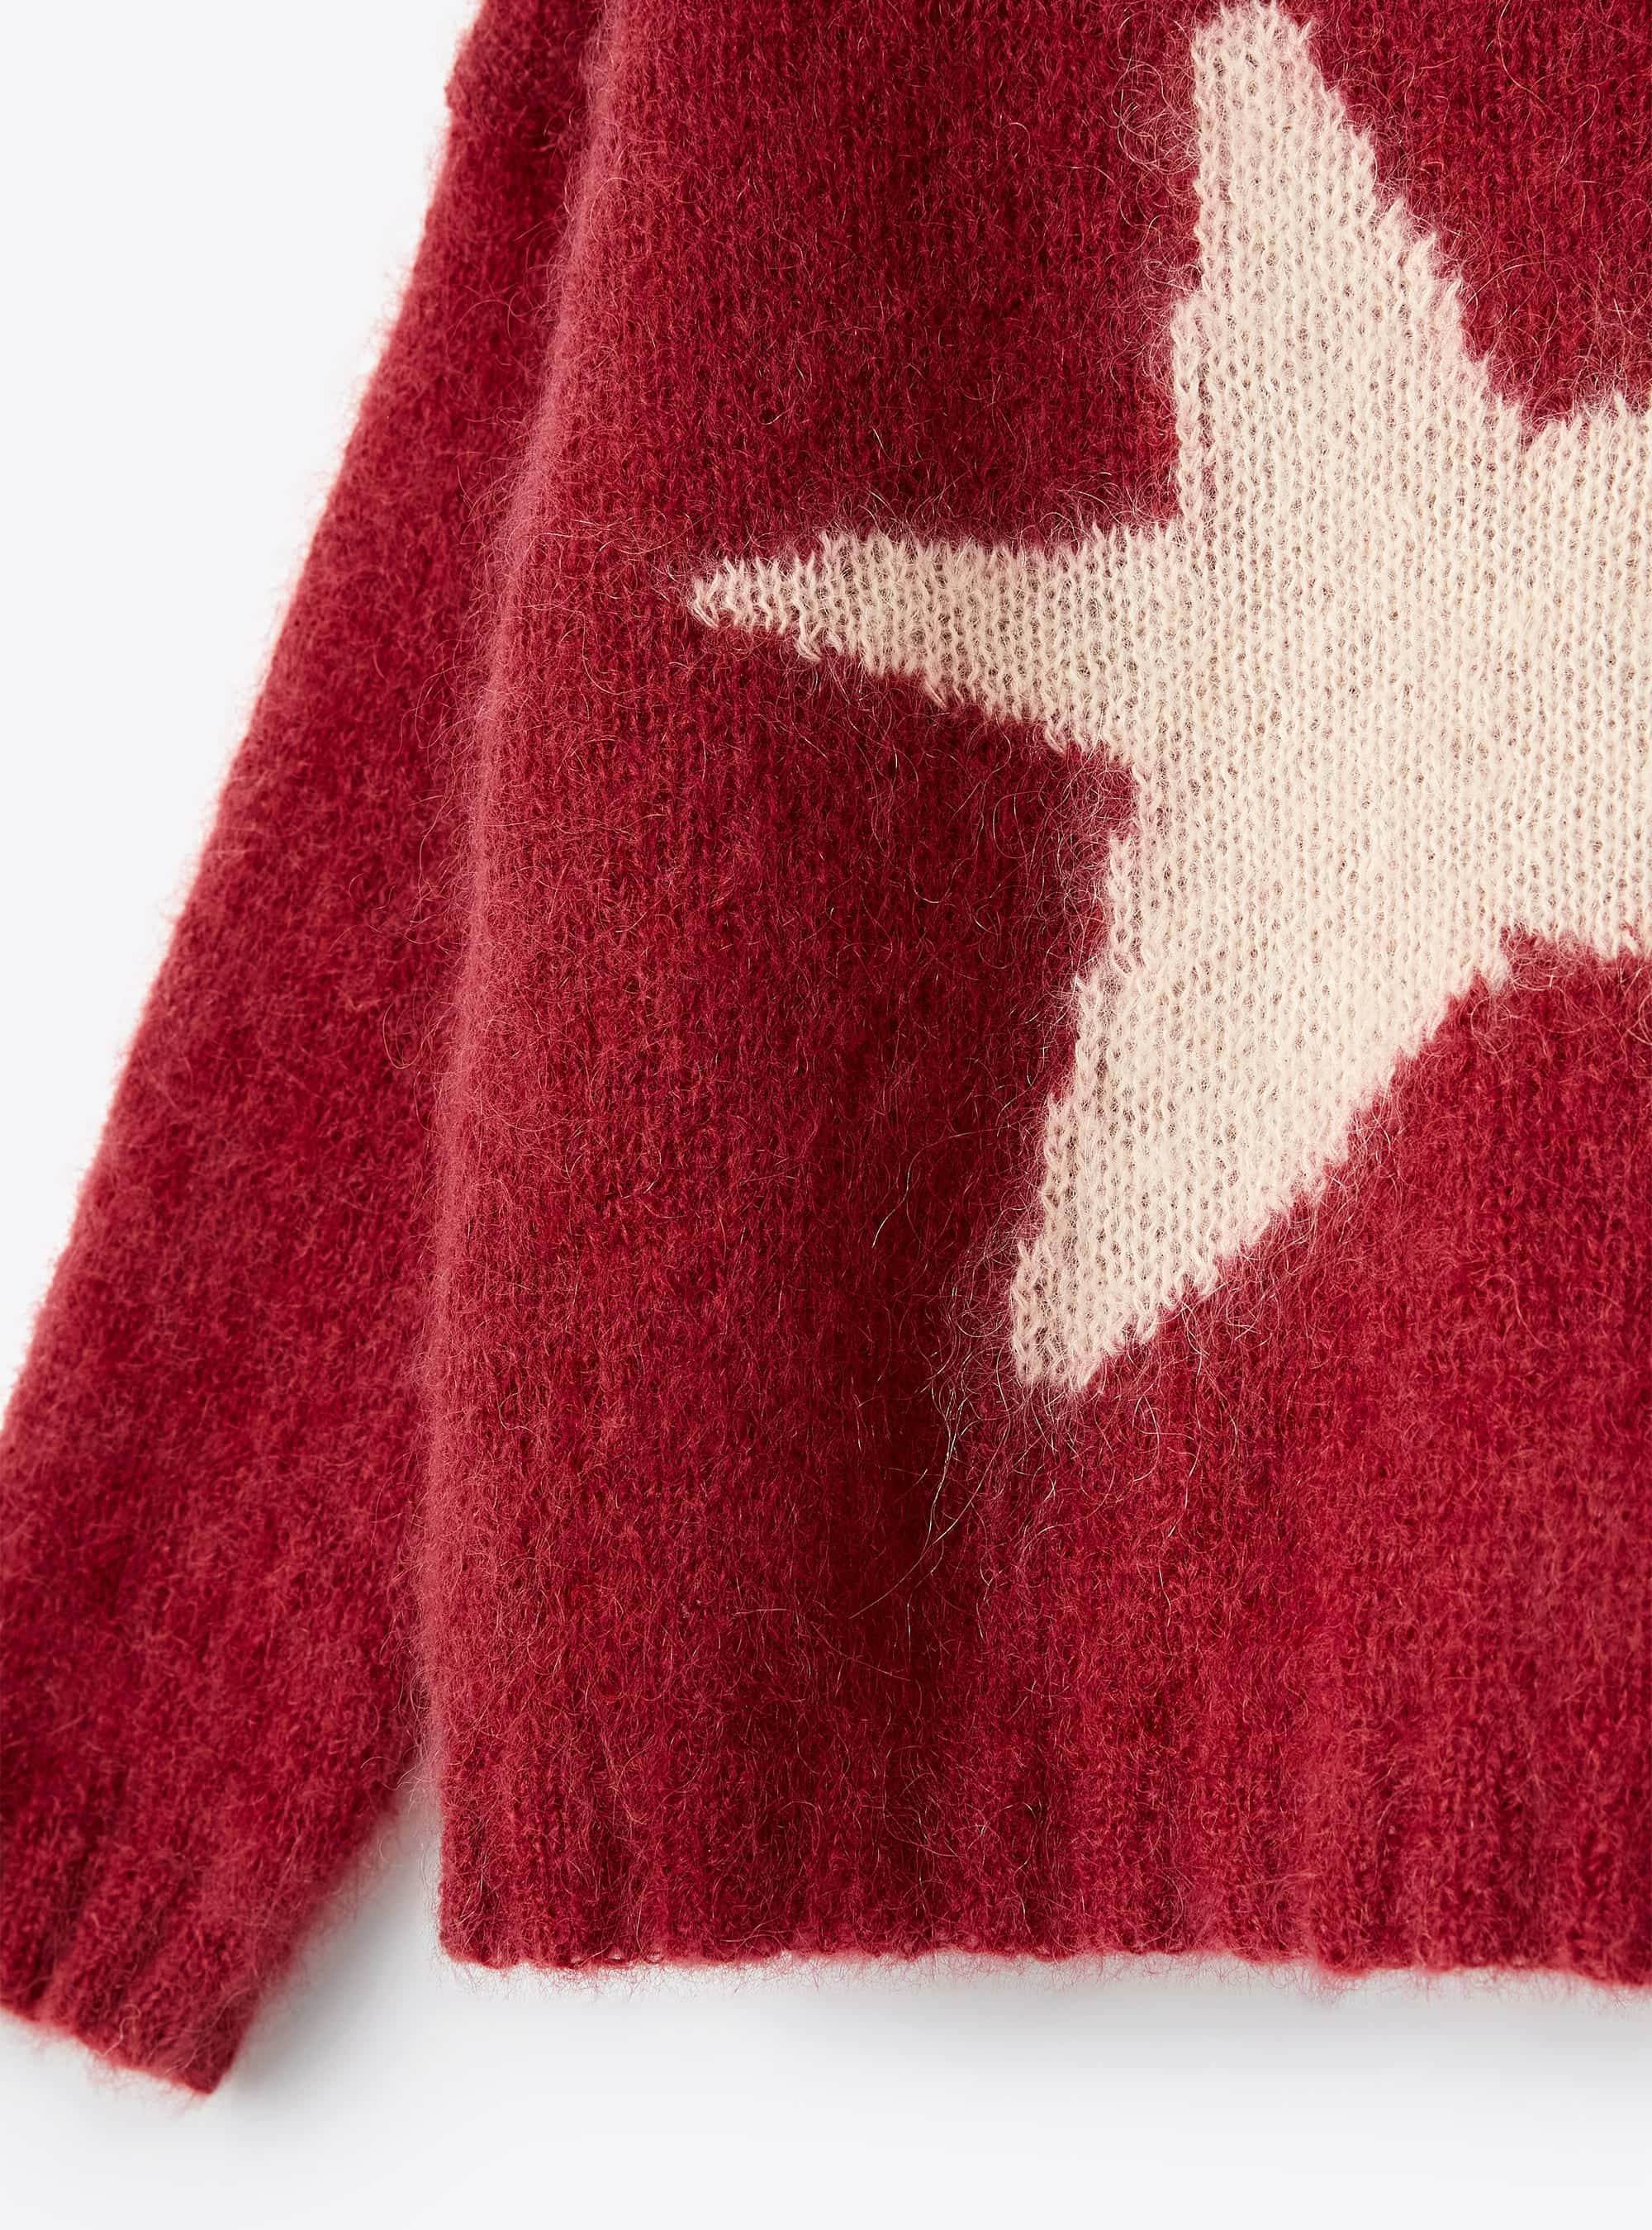 Star motif mohair sweater - Burgundy | Il Gufo